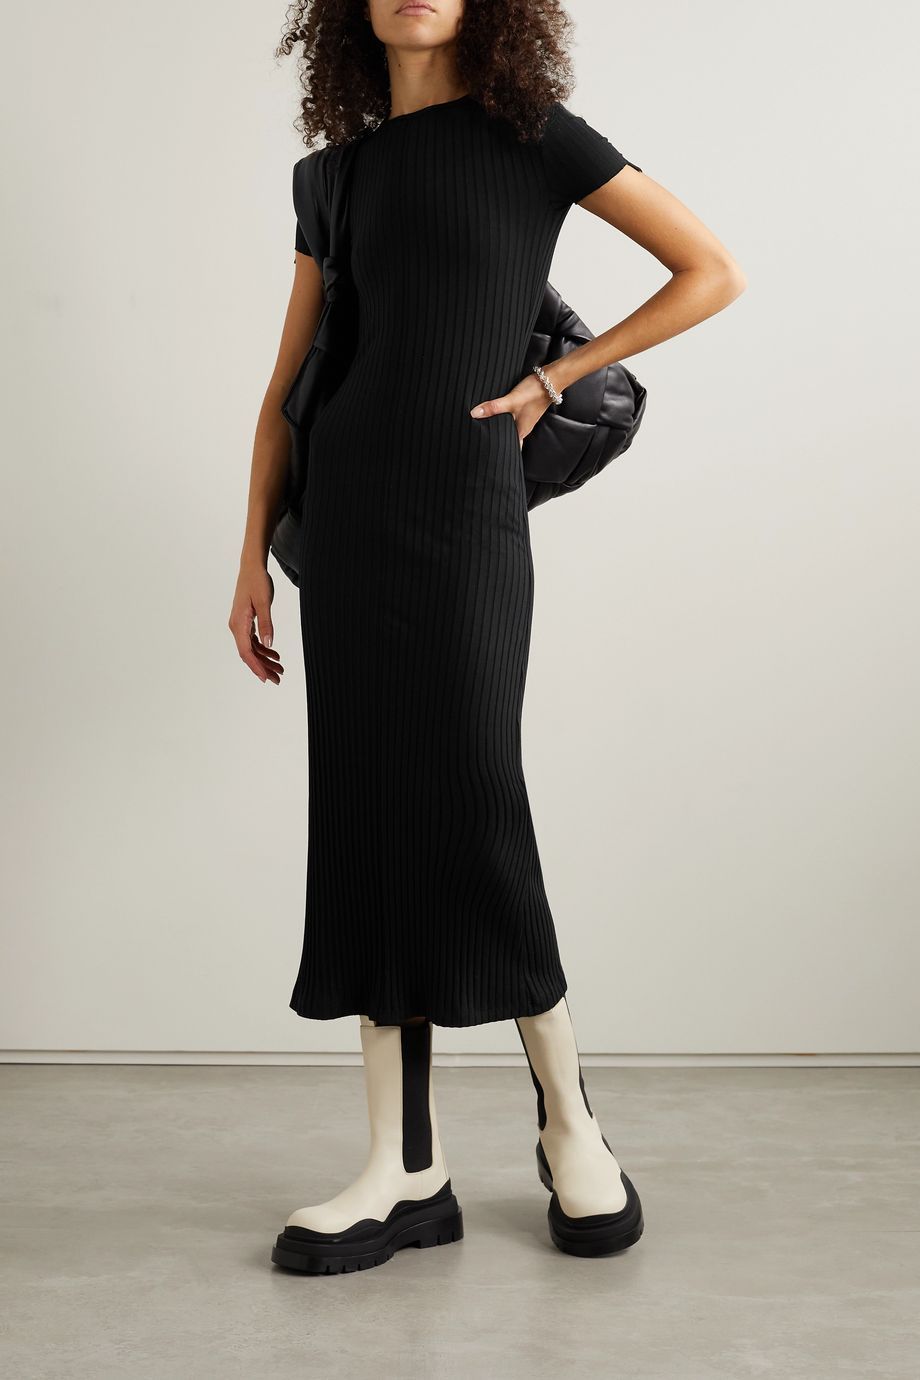 black midi dress for funeral | Dresses Images 2022